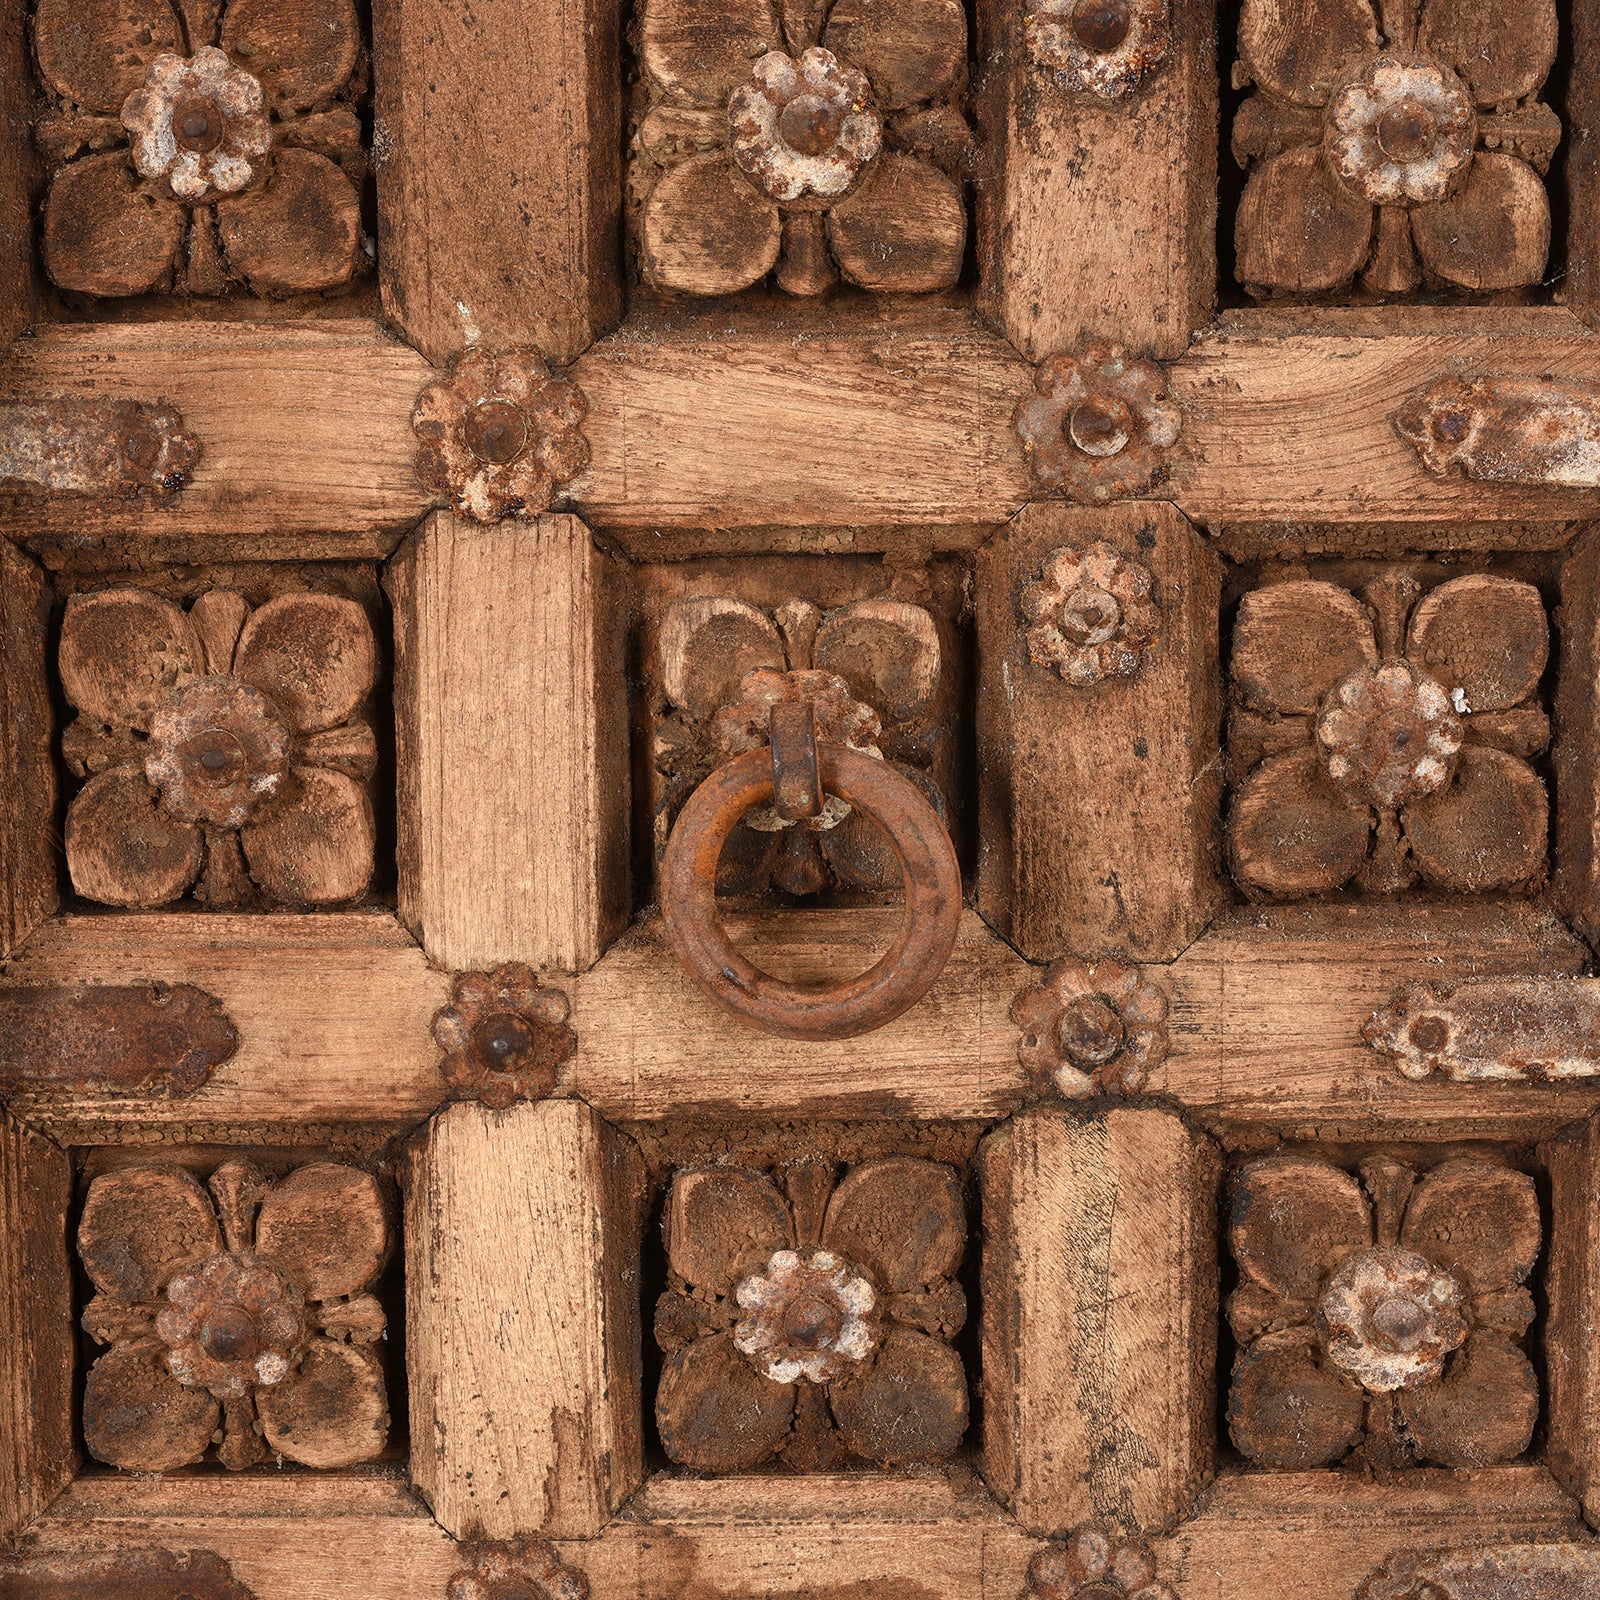 Carved Mughal Teakwood Door From Gujarat | Indigo Antiques